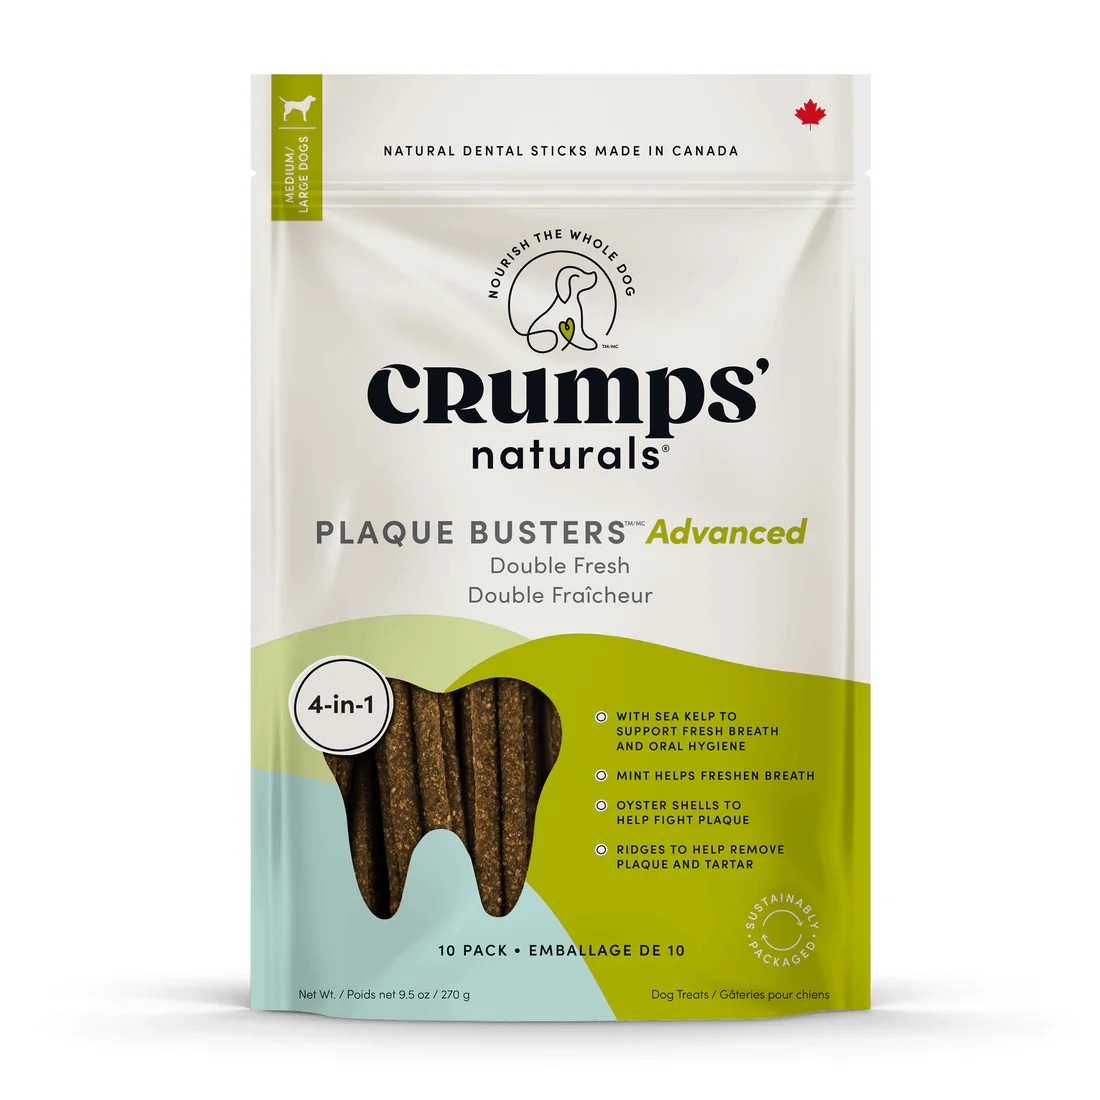 Crumps’ Naturals Plaque Busters Advanced Double Fresh Dental Sticks